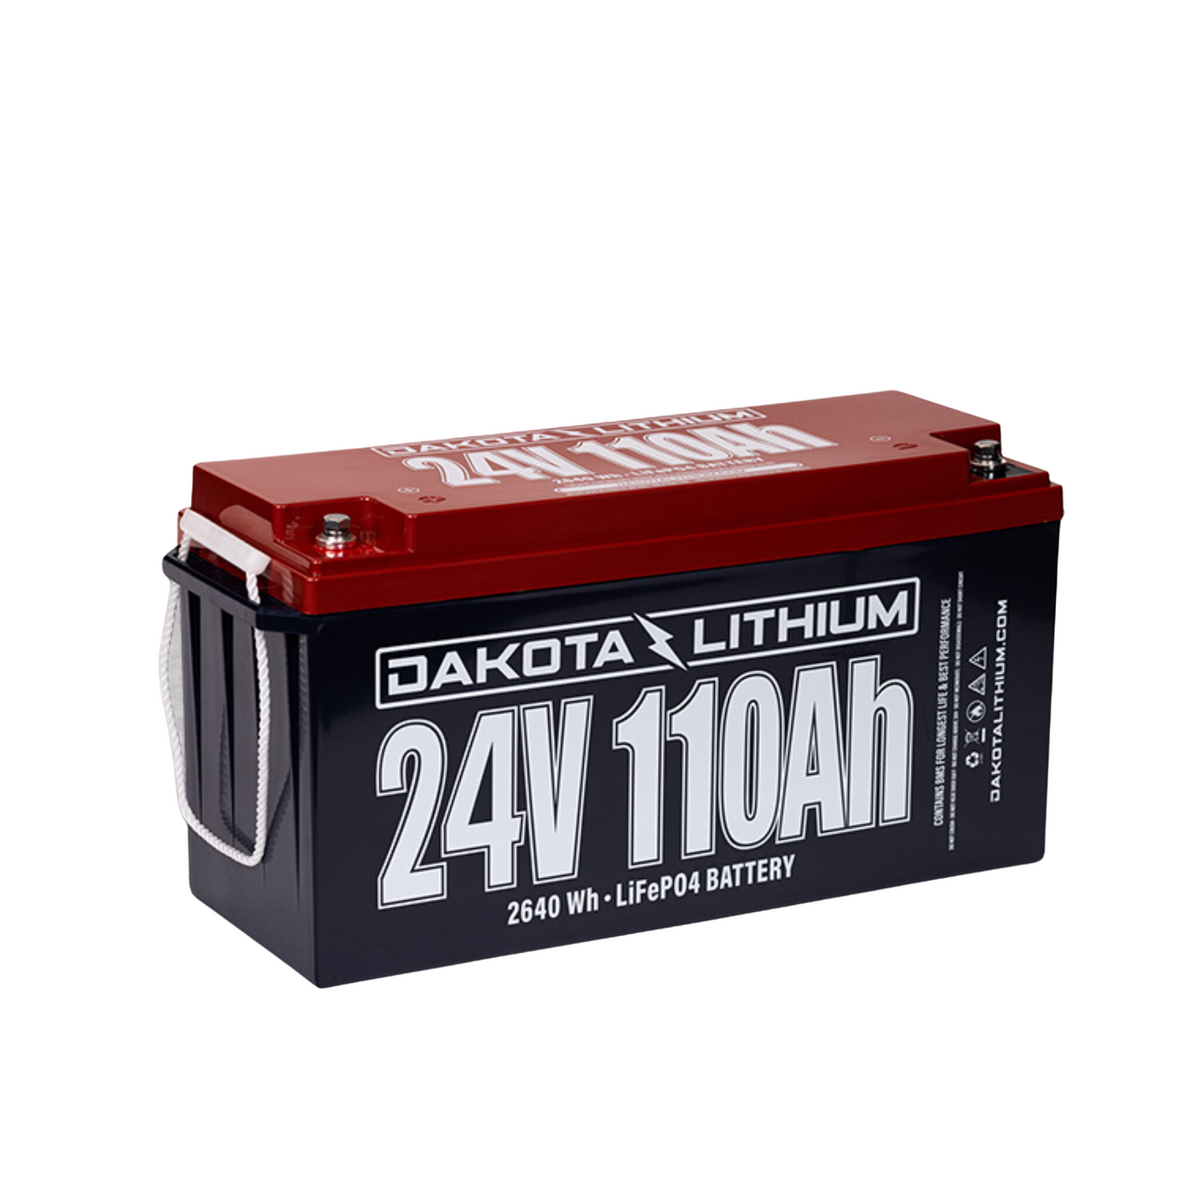 Dakota Lithium 24V 110Ah Deep Cycle LiFePO4 Battery